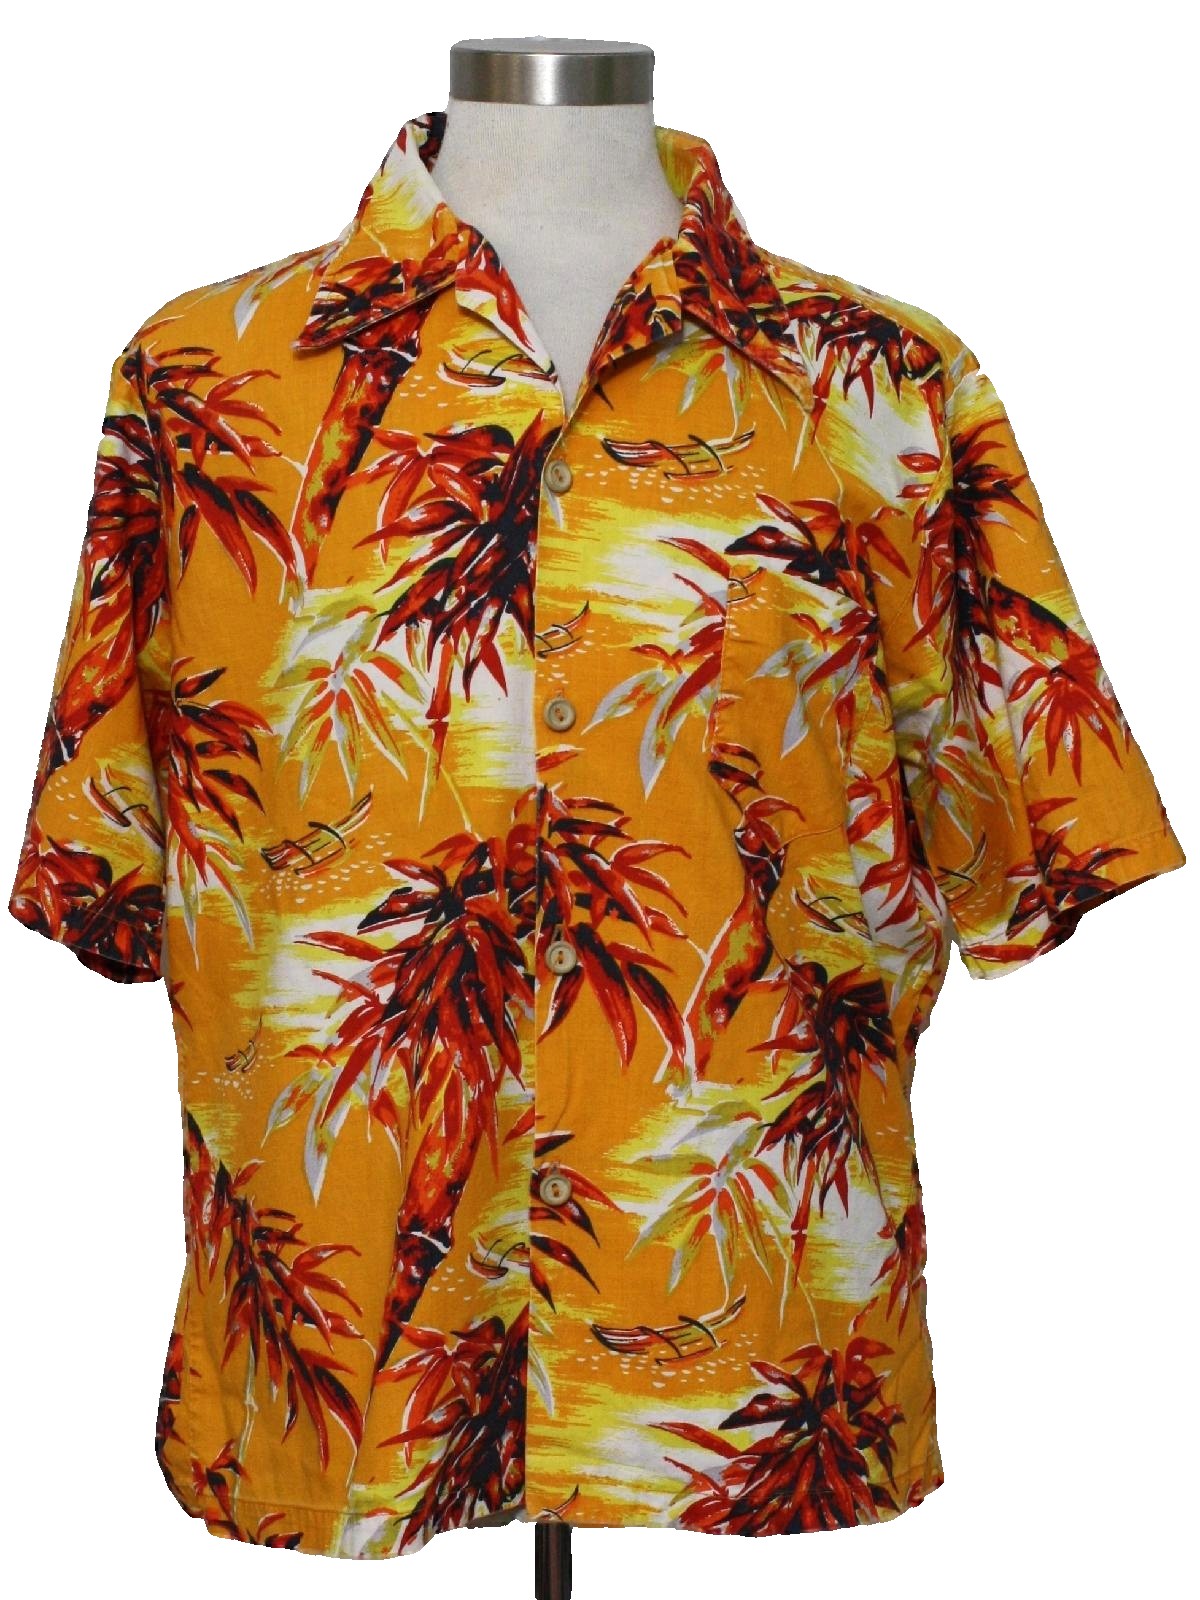 Seventies Vintage Hawaiian Shirt: 70s -JcPenney- Mens dark gold